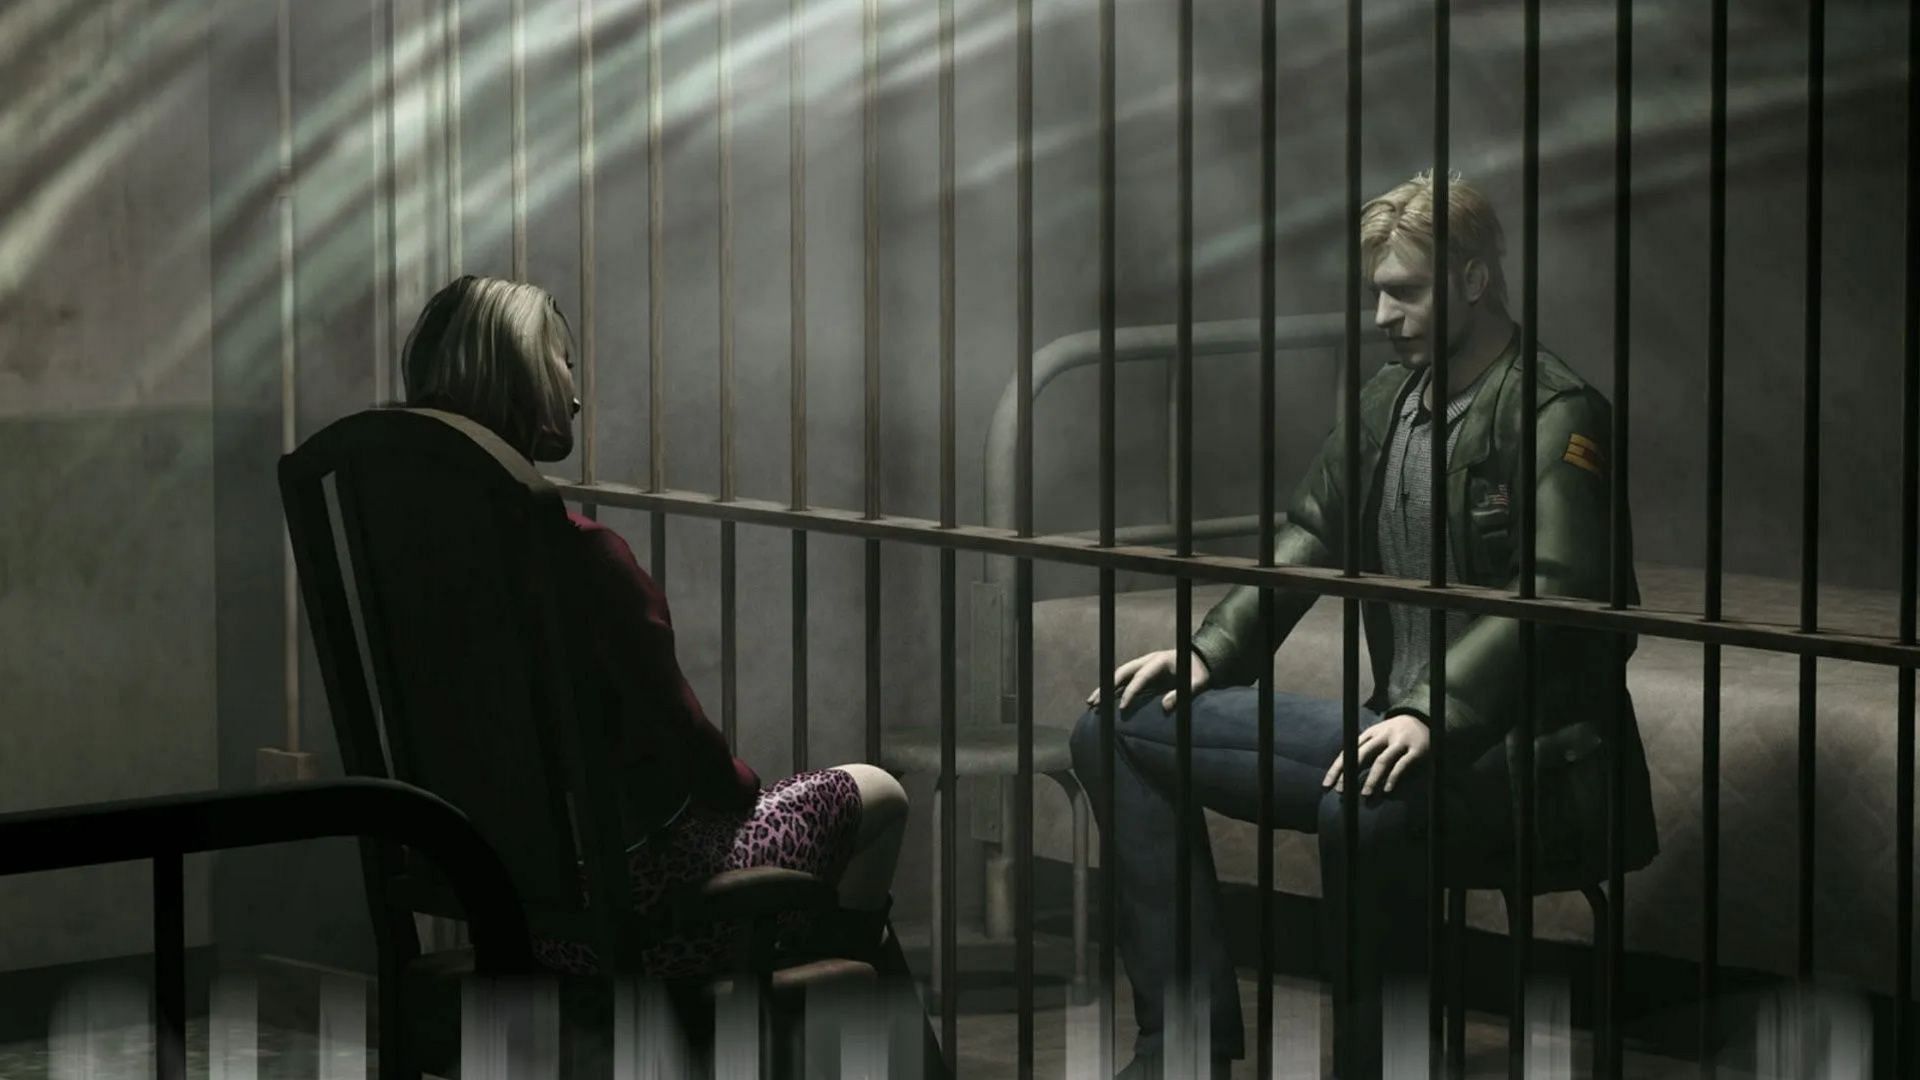 Silent Hill 2 featuring James and Maria. (Image via Konami)